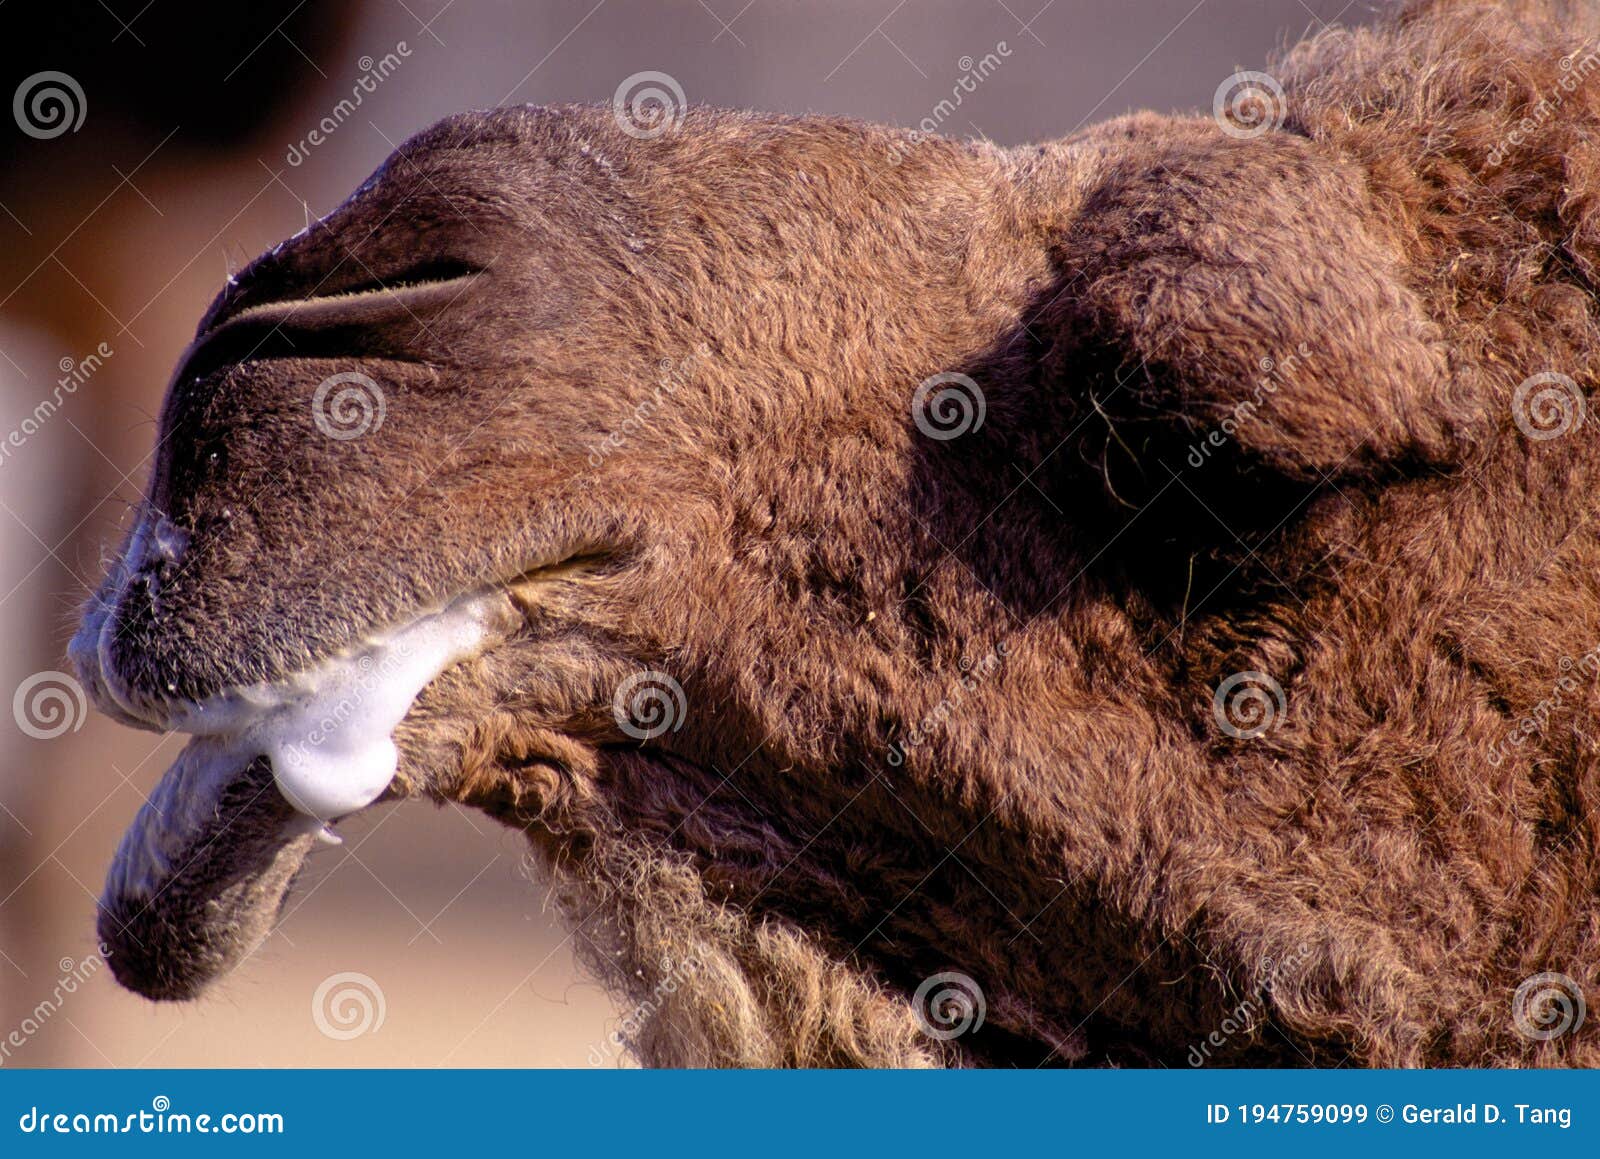 dromedary camel froths   29890